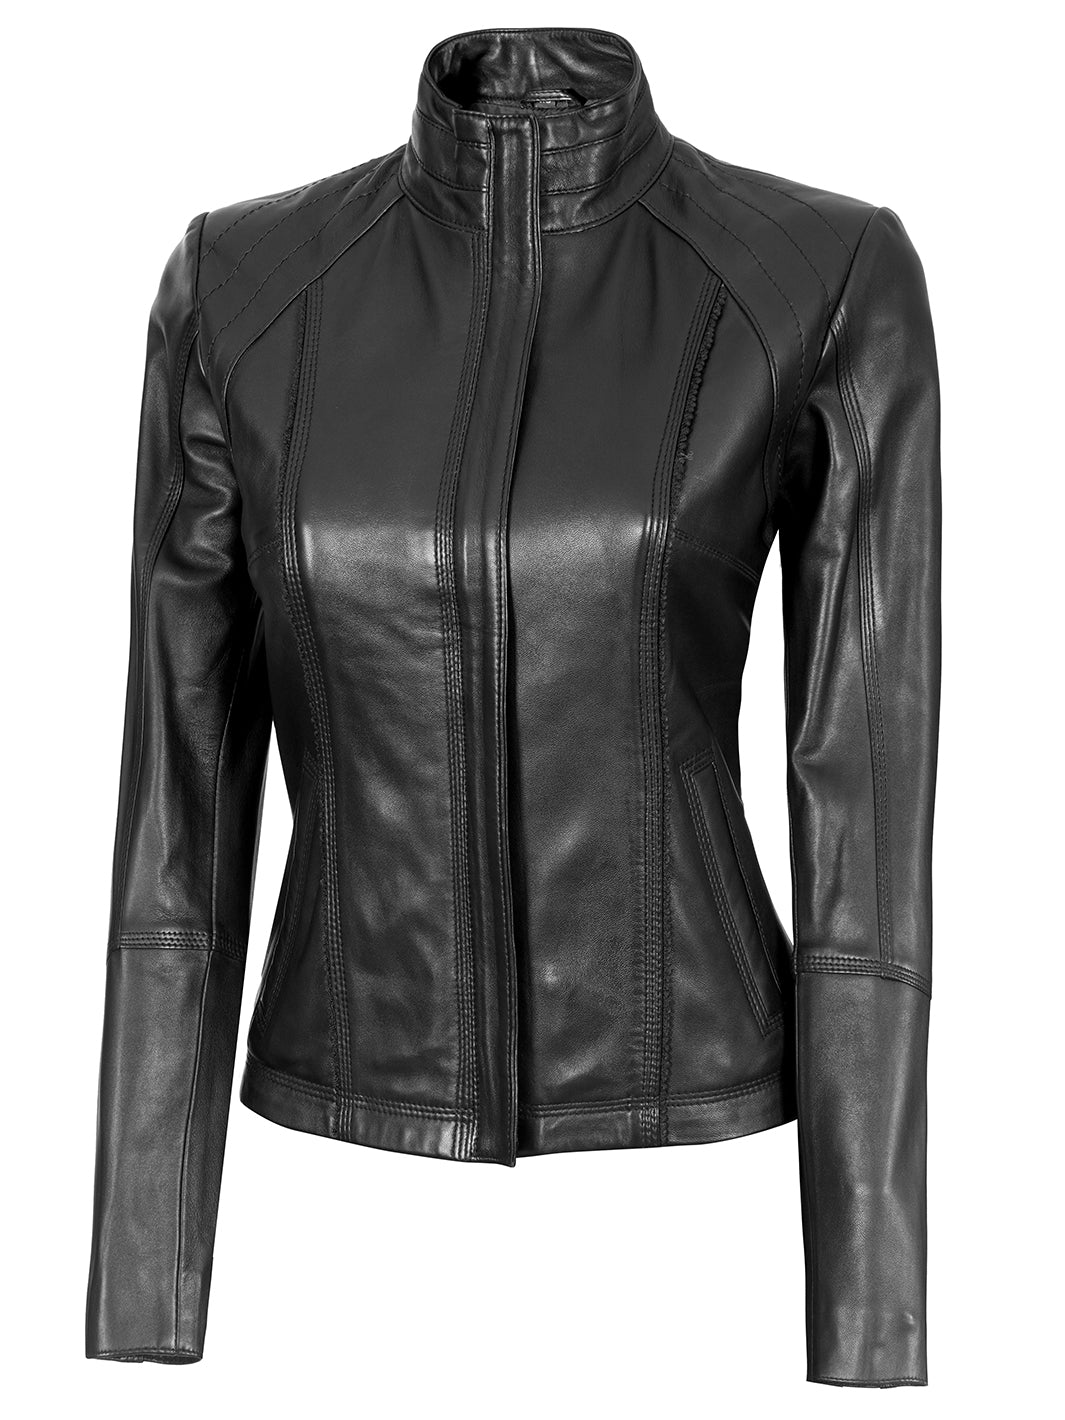 Black leather jacket for women